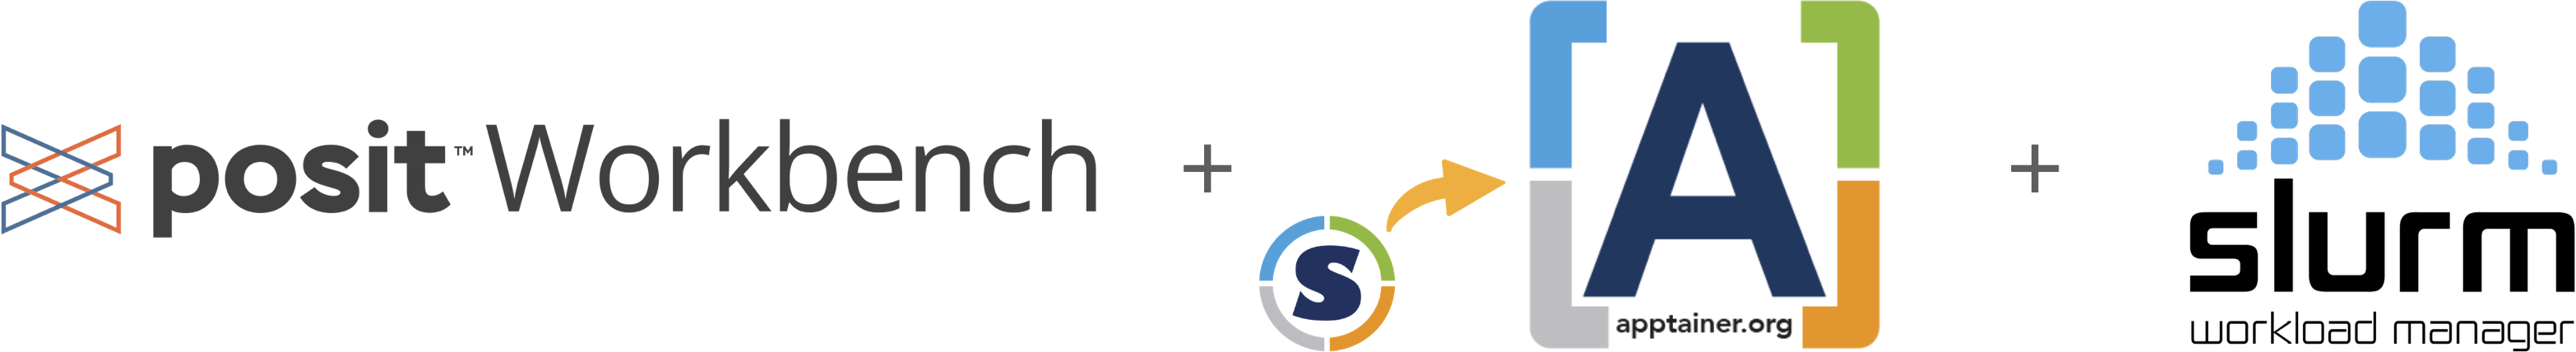 Posit Workbench logo + Apptainer logo + Slurm logo